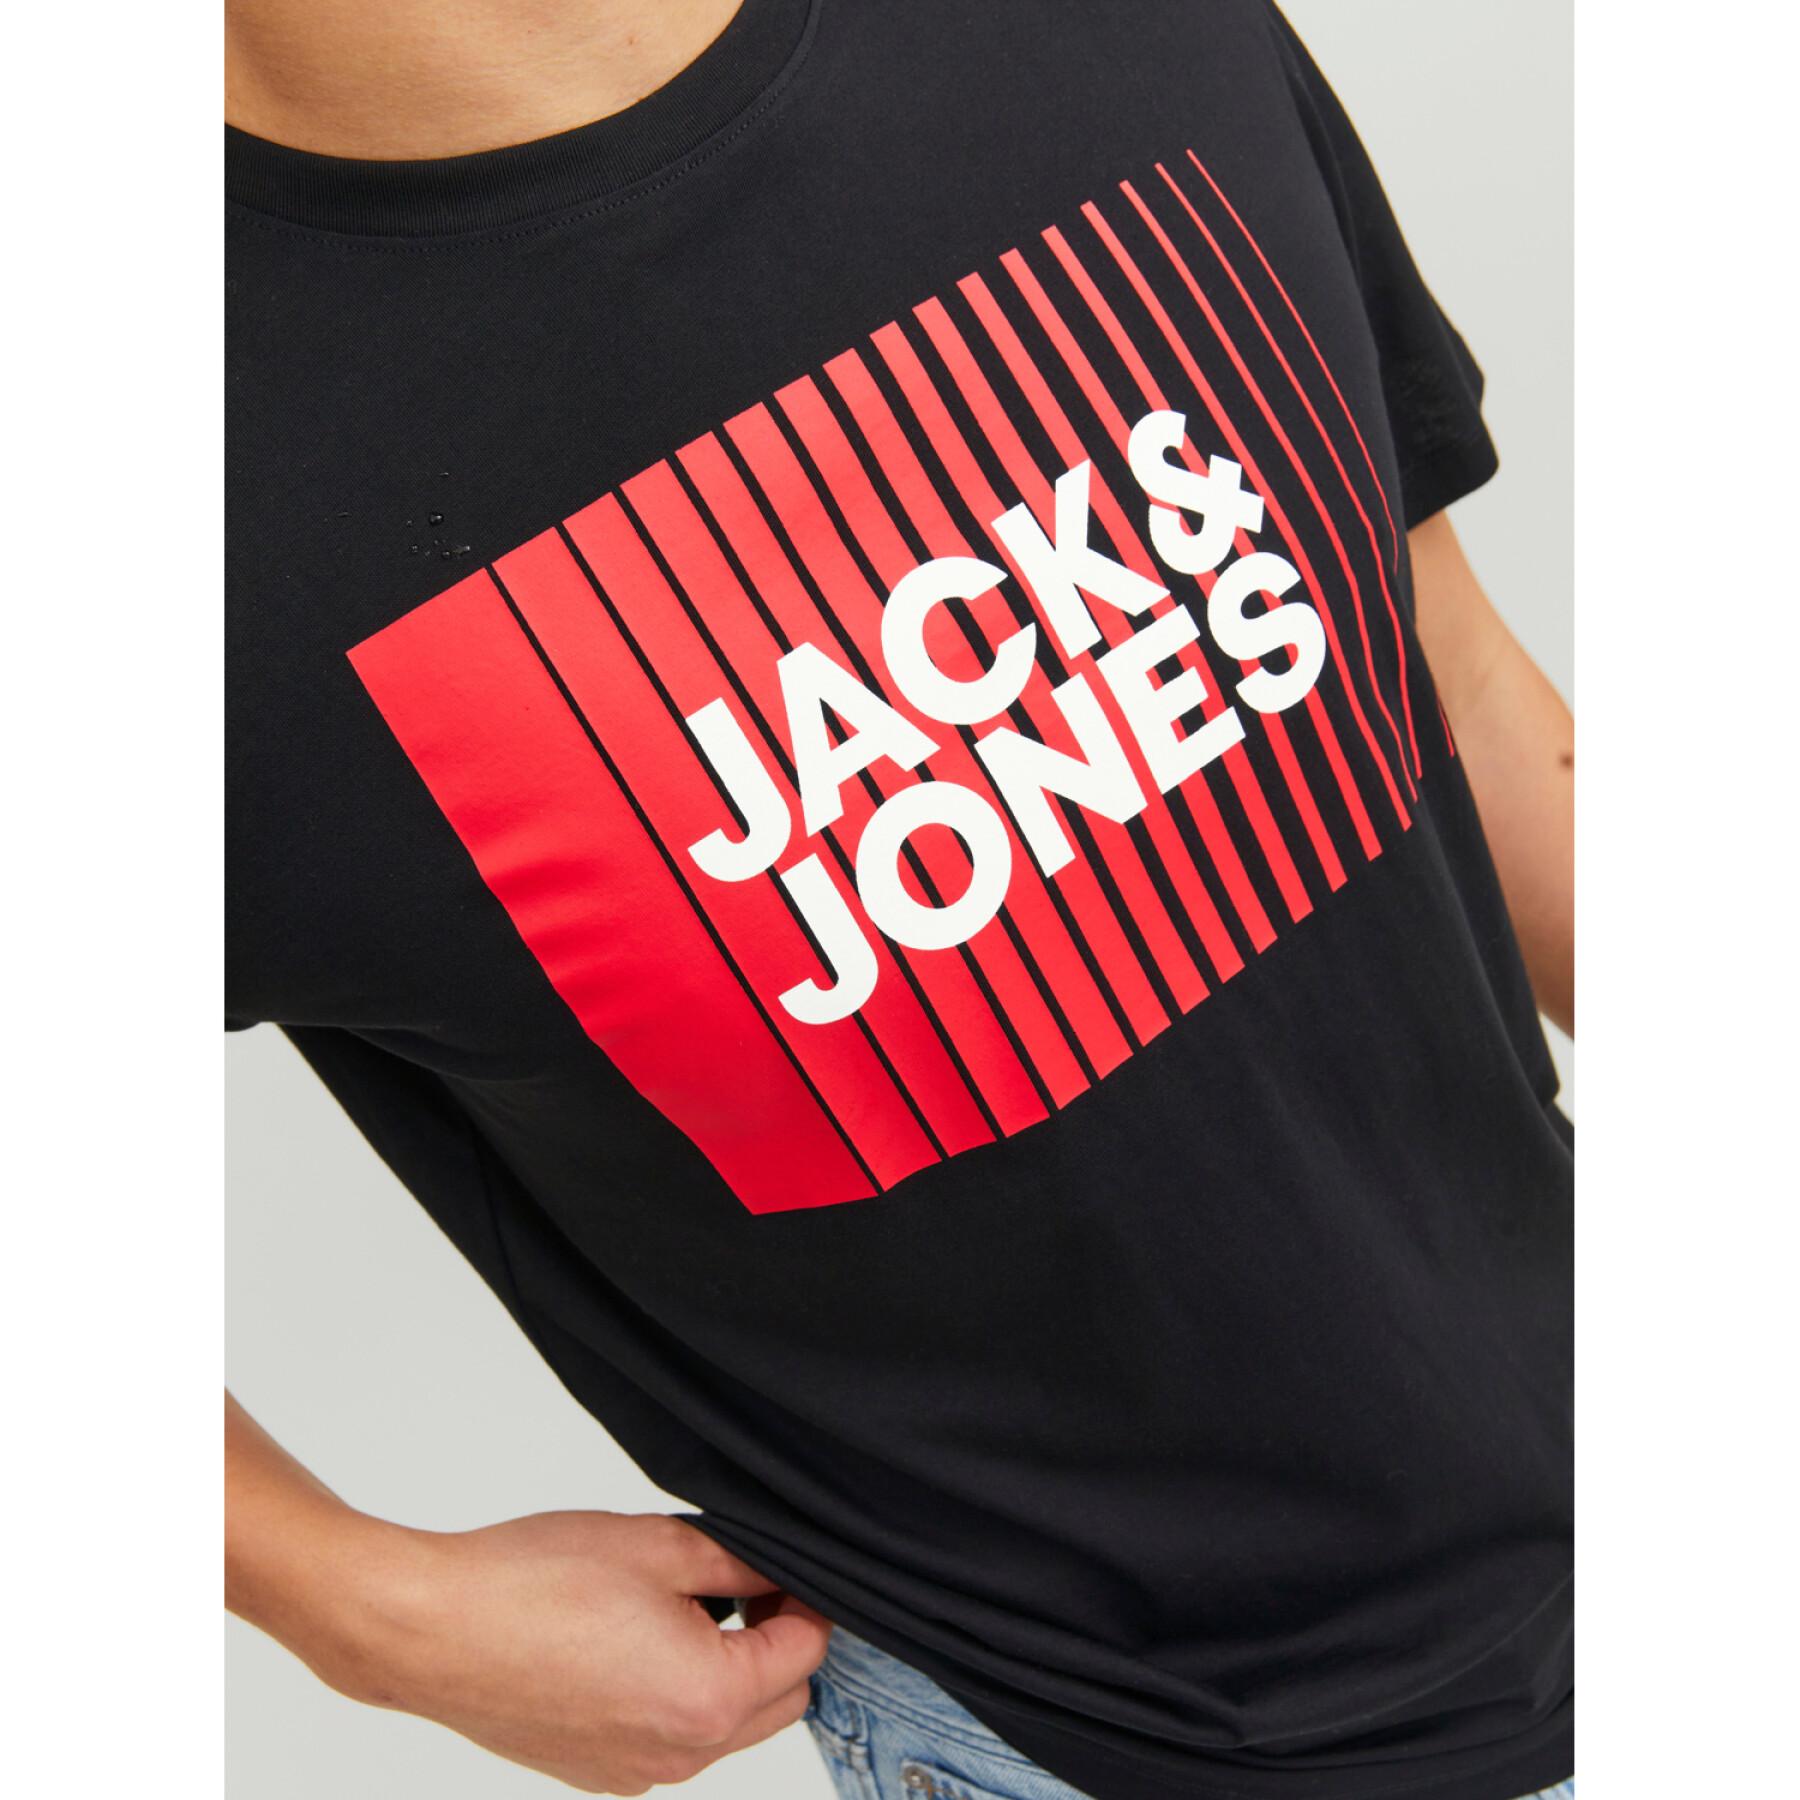 T-shirt de pescoço redondo Jack & Jones Corp Logo